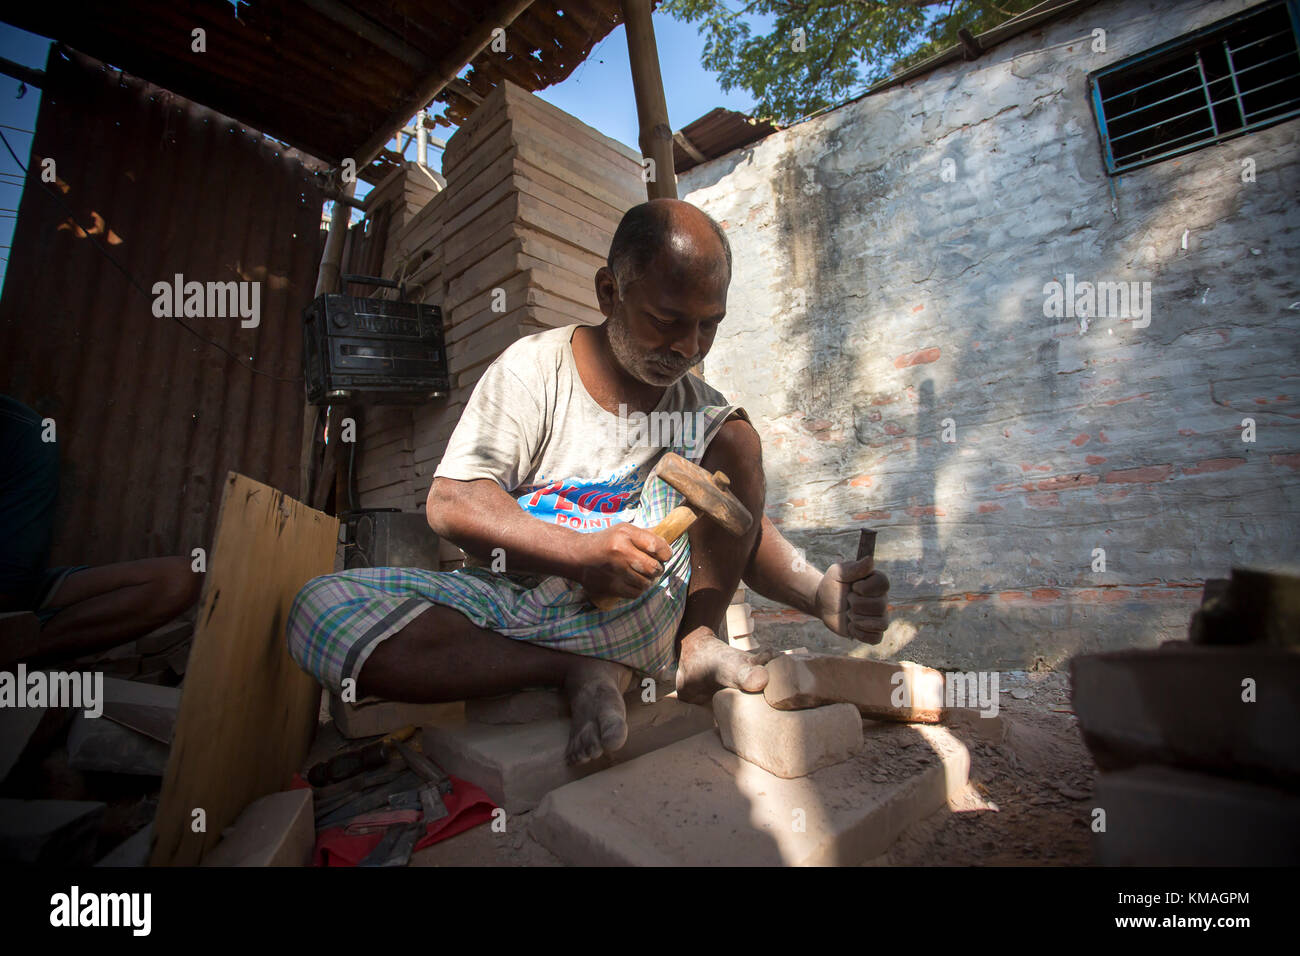 A craftsman (Nirojon Sarkar, Age 55) is busy mending traditional stone grinder, popularly known as Sheel-Pata, in Dhaka, Bangladesh. Stock Photo